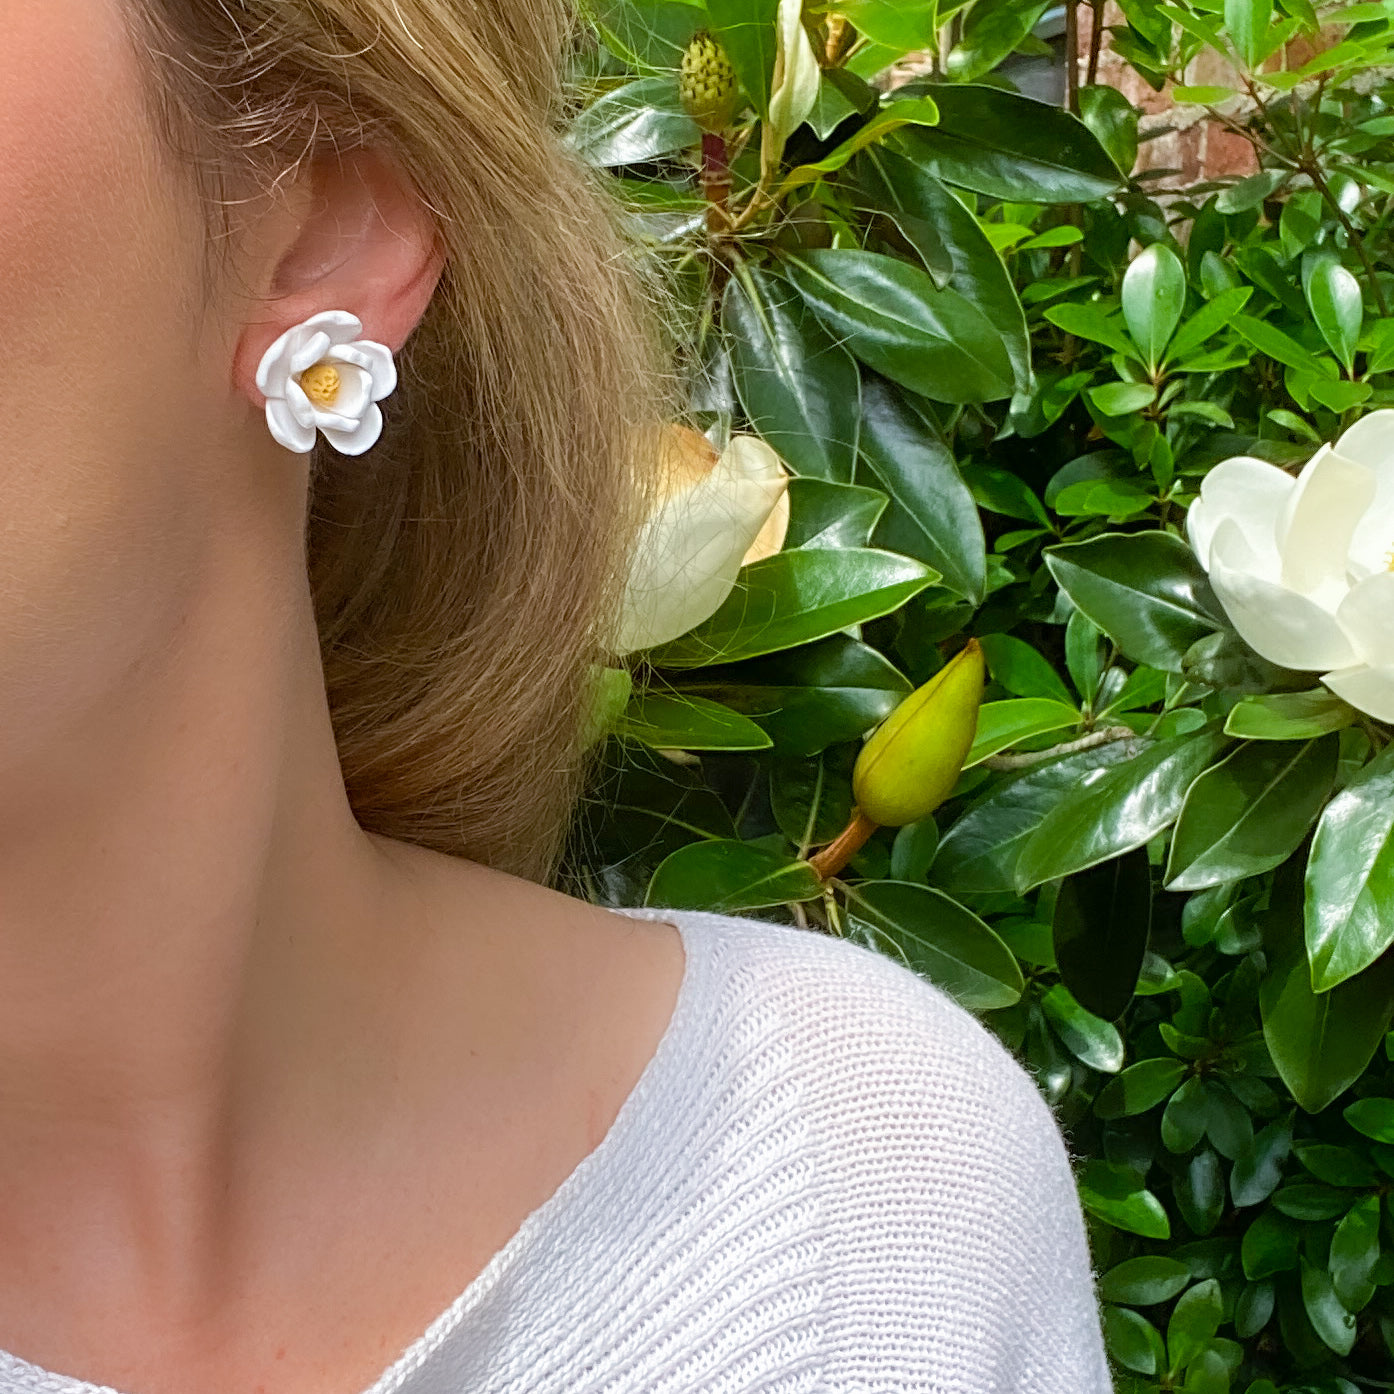 Magnolia Flower Stud Earrings